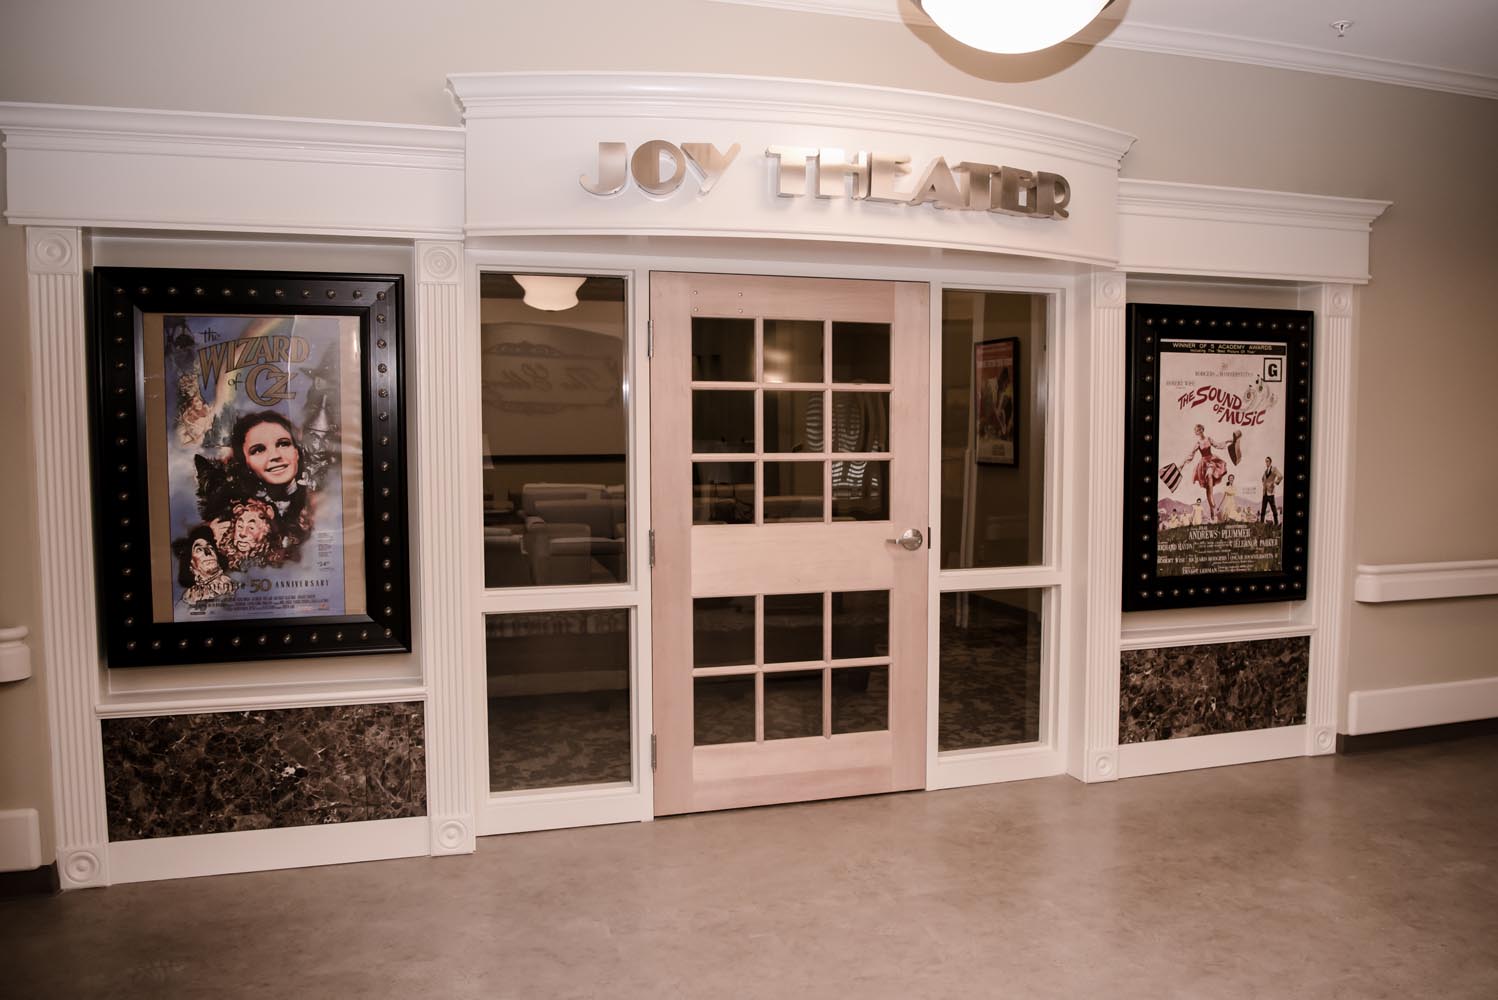 The Joy Theater